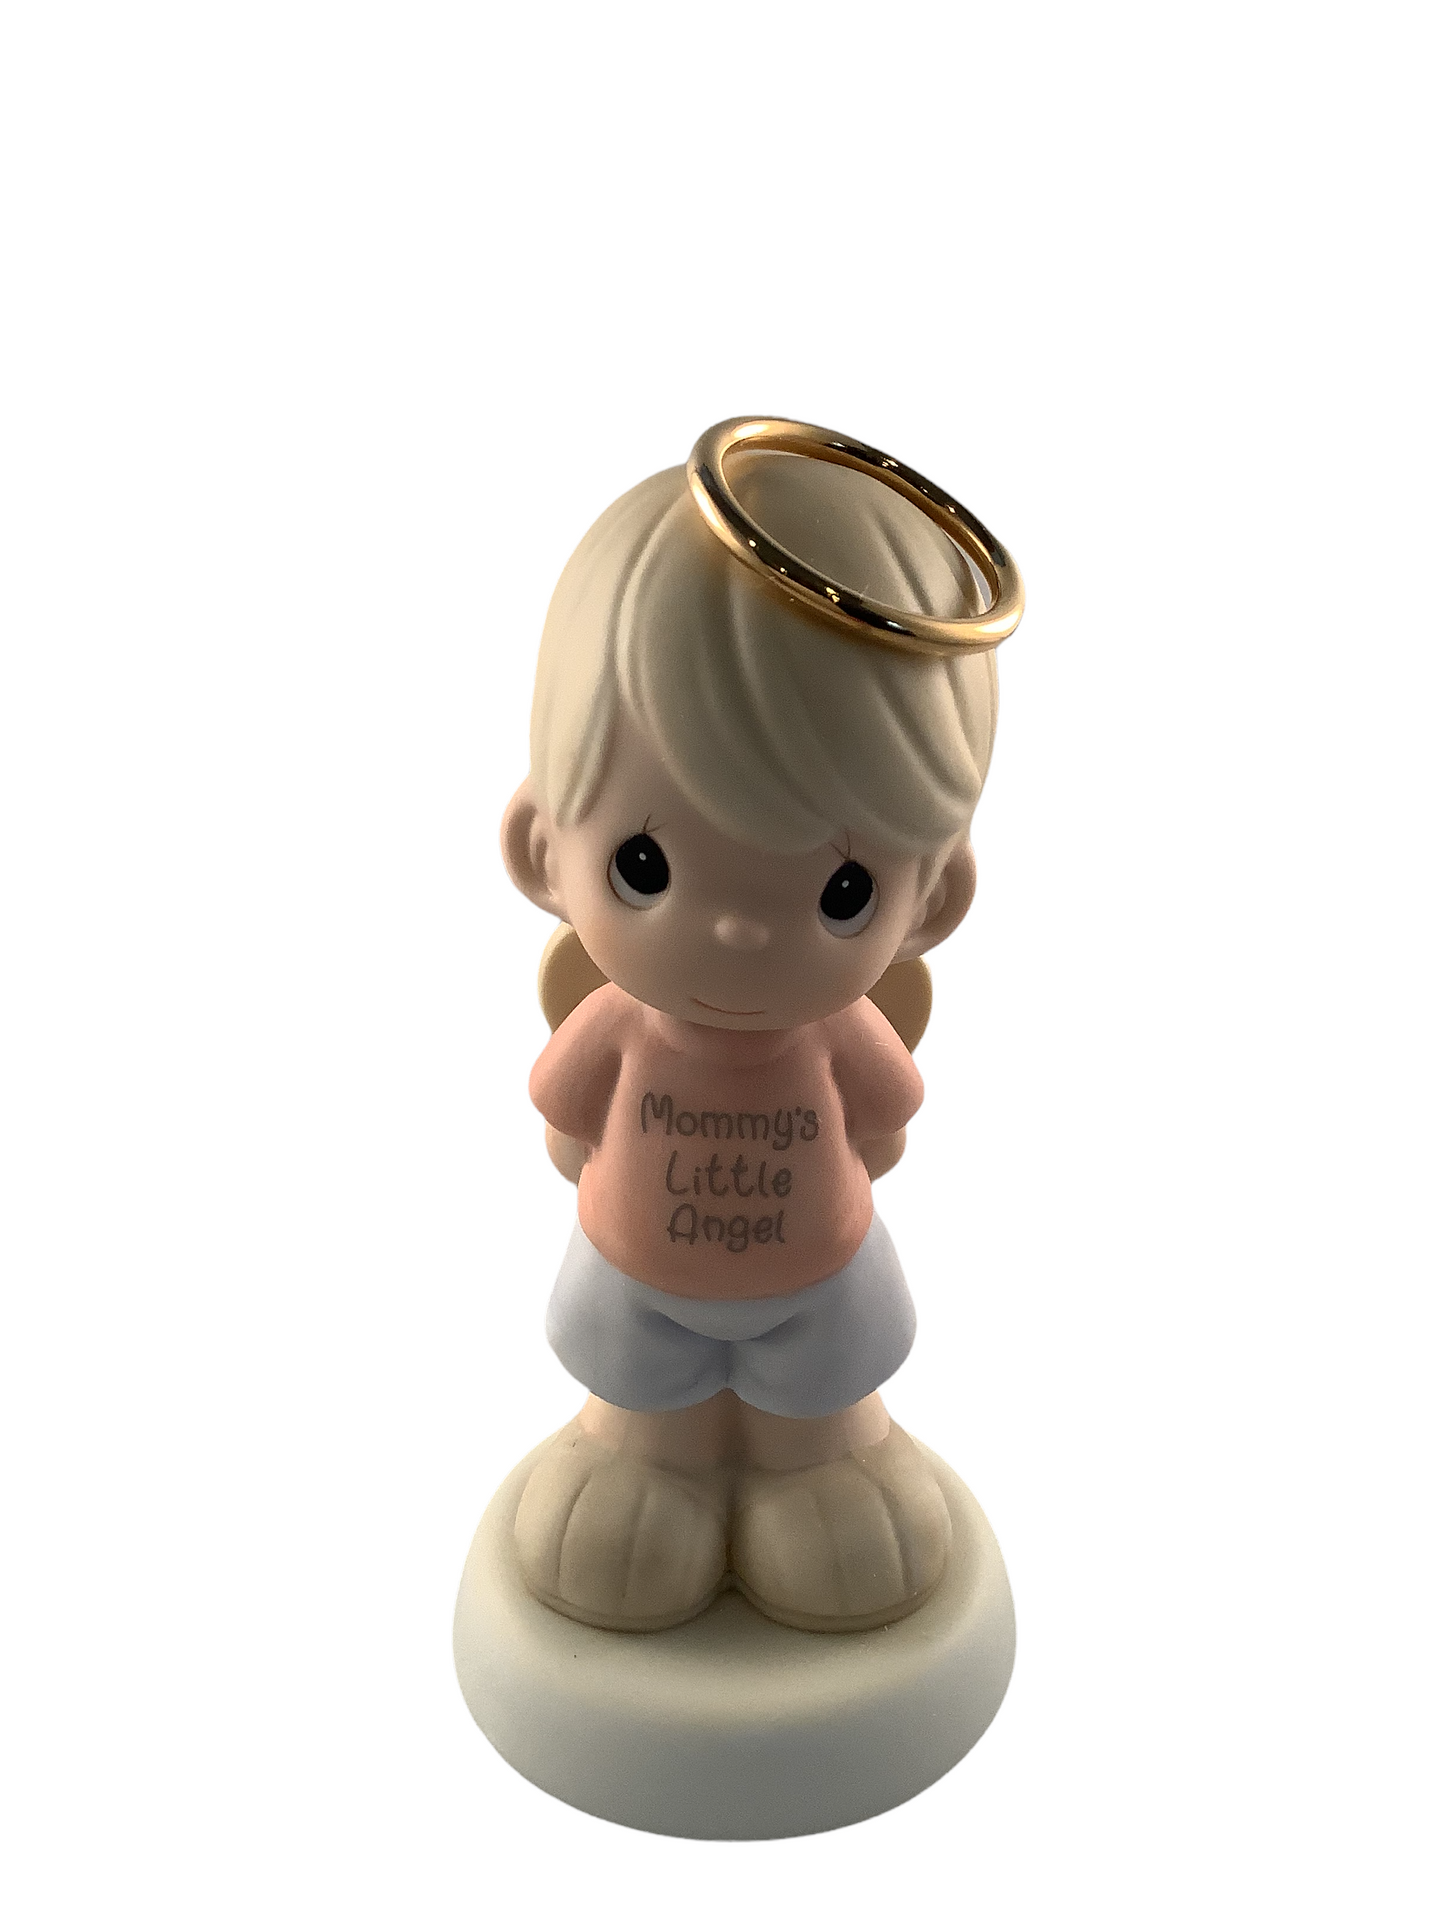 Mommy’s Little Angel (Boy) - Precious Moment Figurine